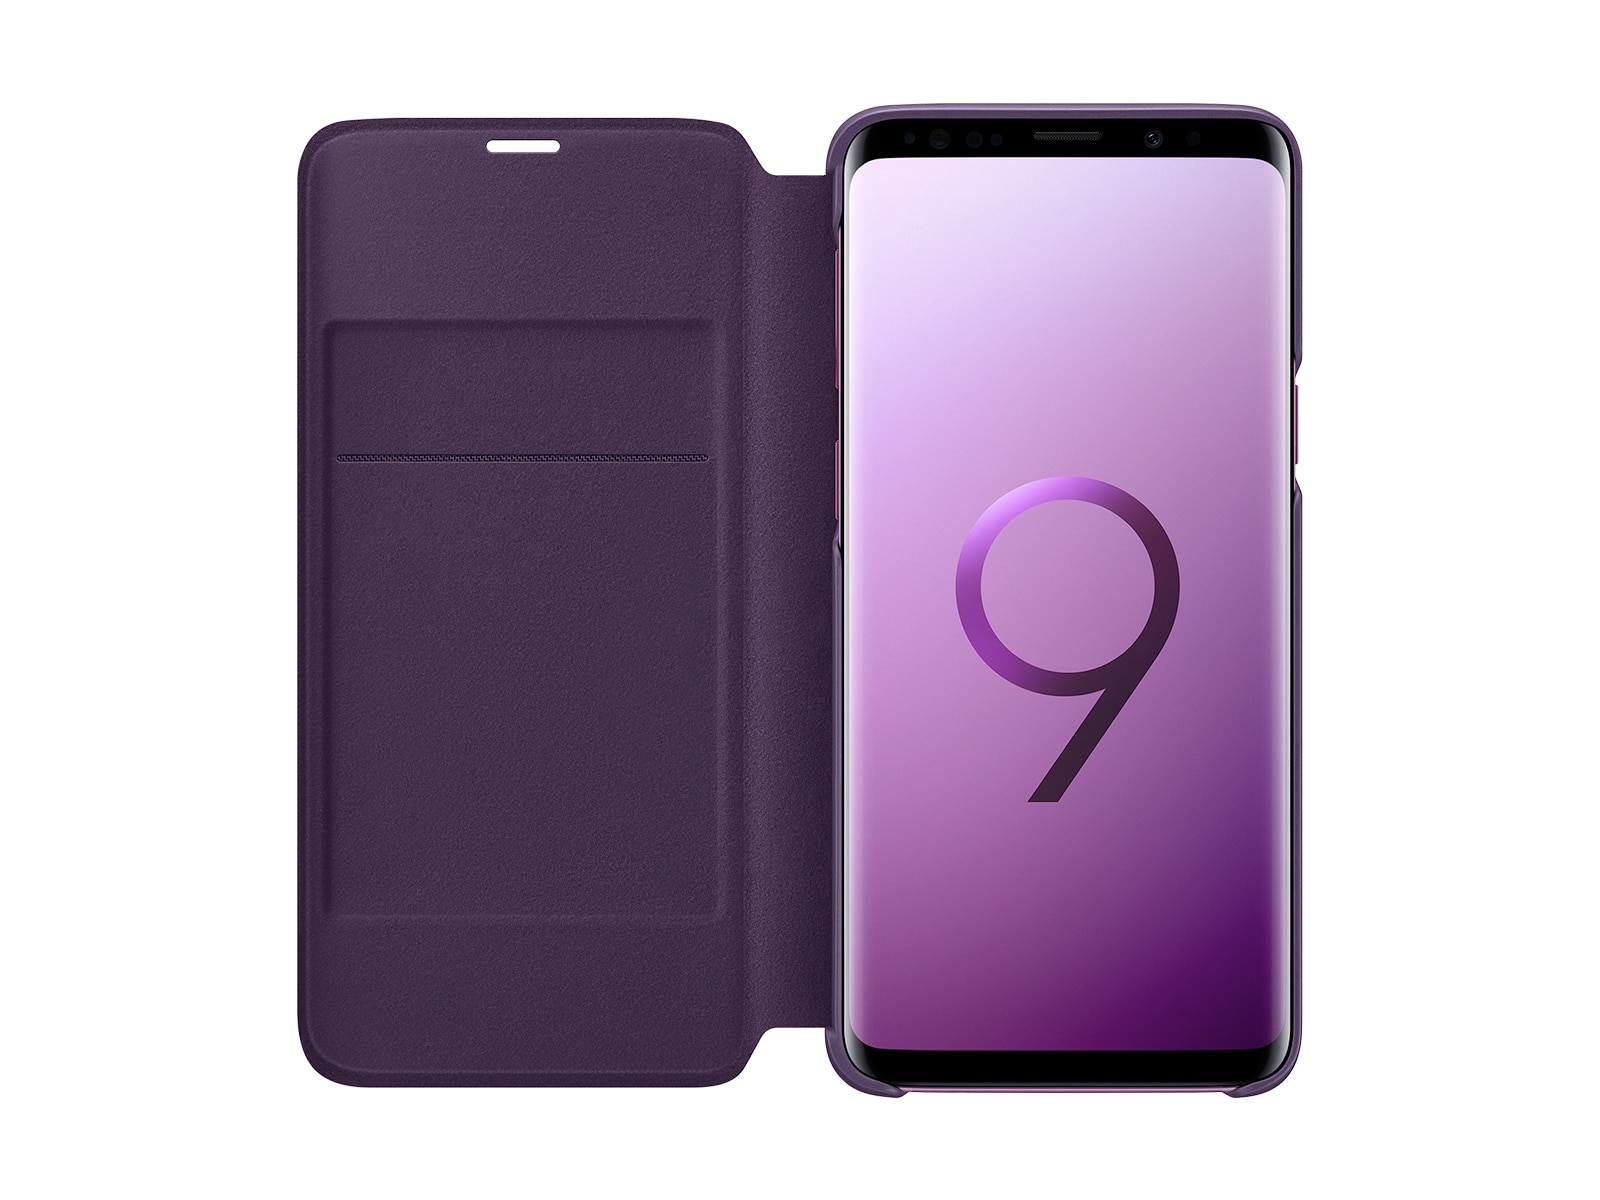 håber eventyr Sammenligning Galaxy S9 LED Wallet Cover, Violet Mobile Accessories - EF-NG960PVEGUS |  Samsung US